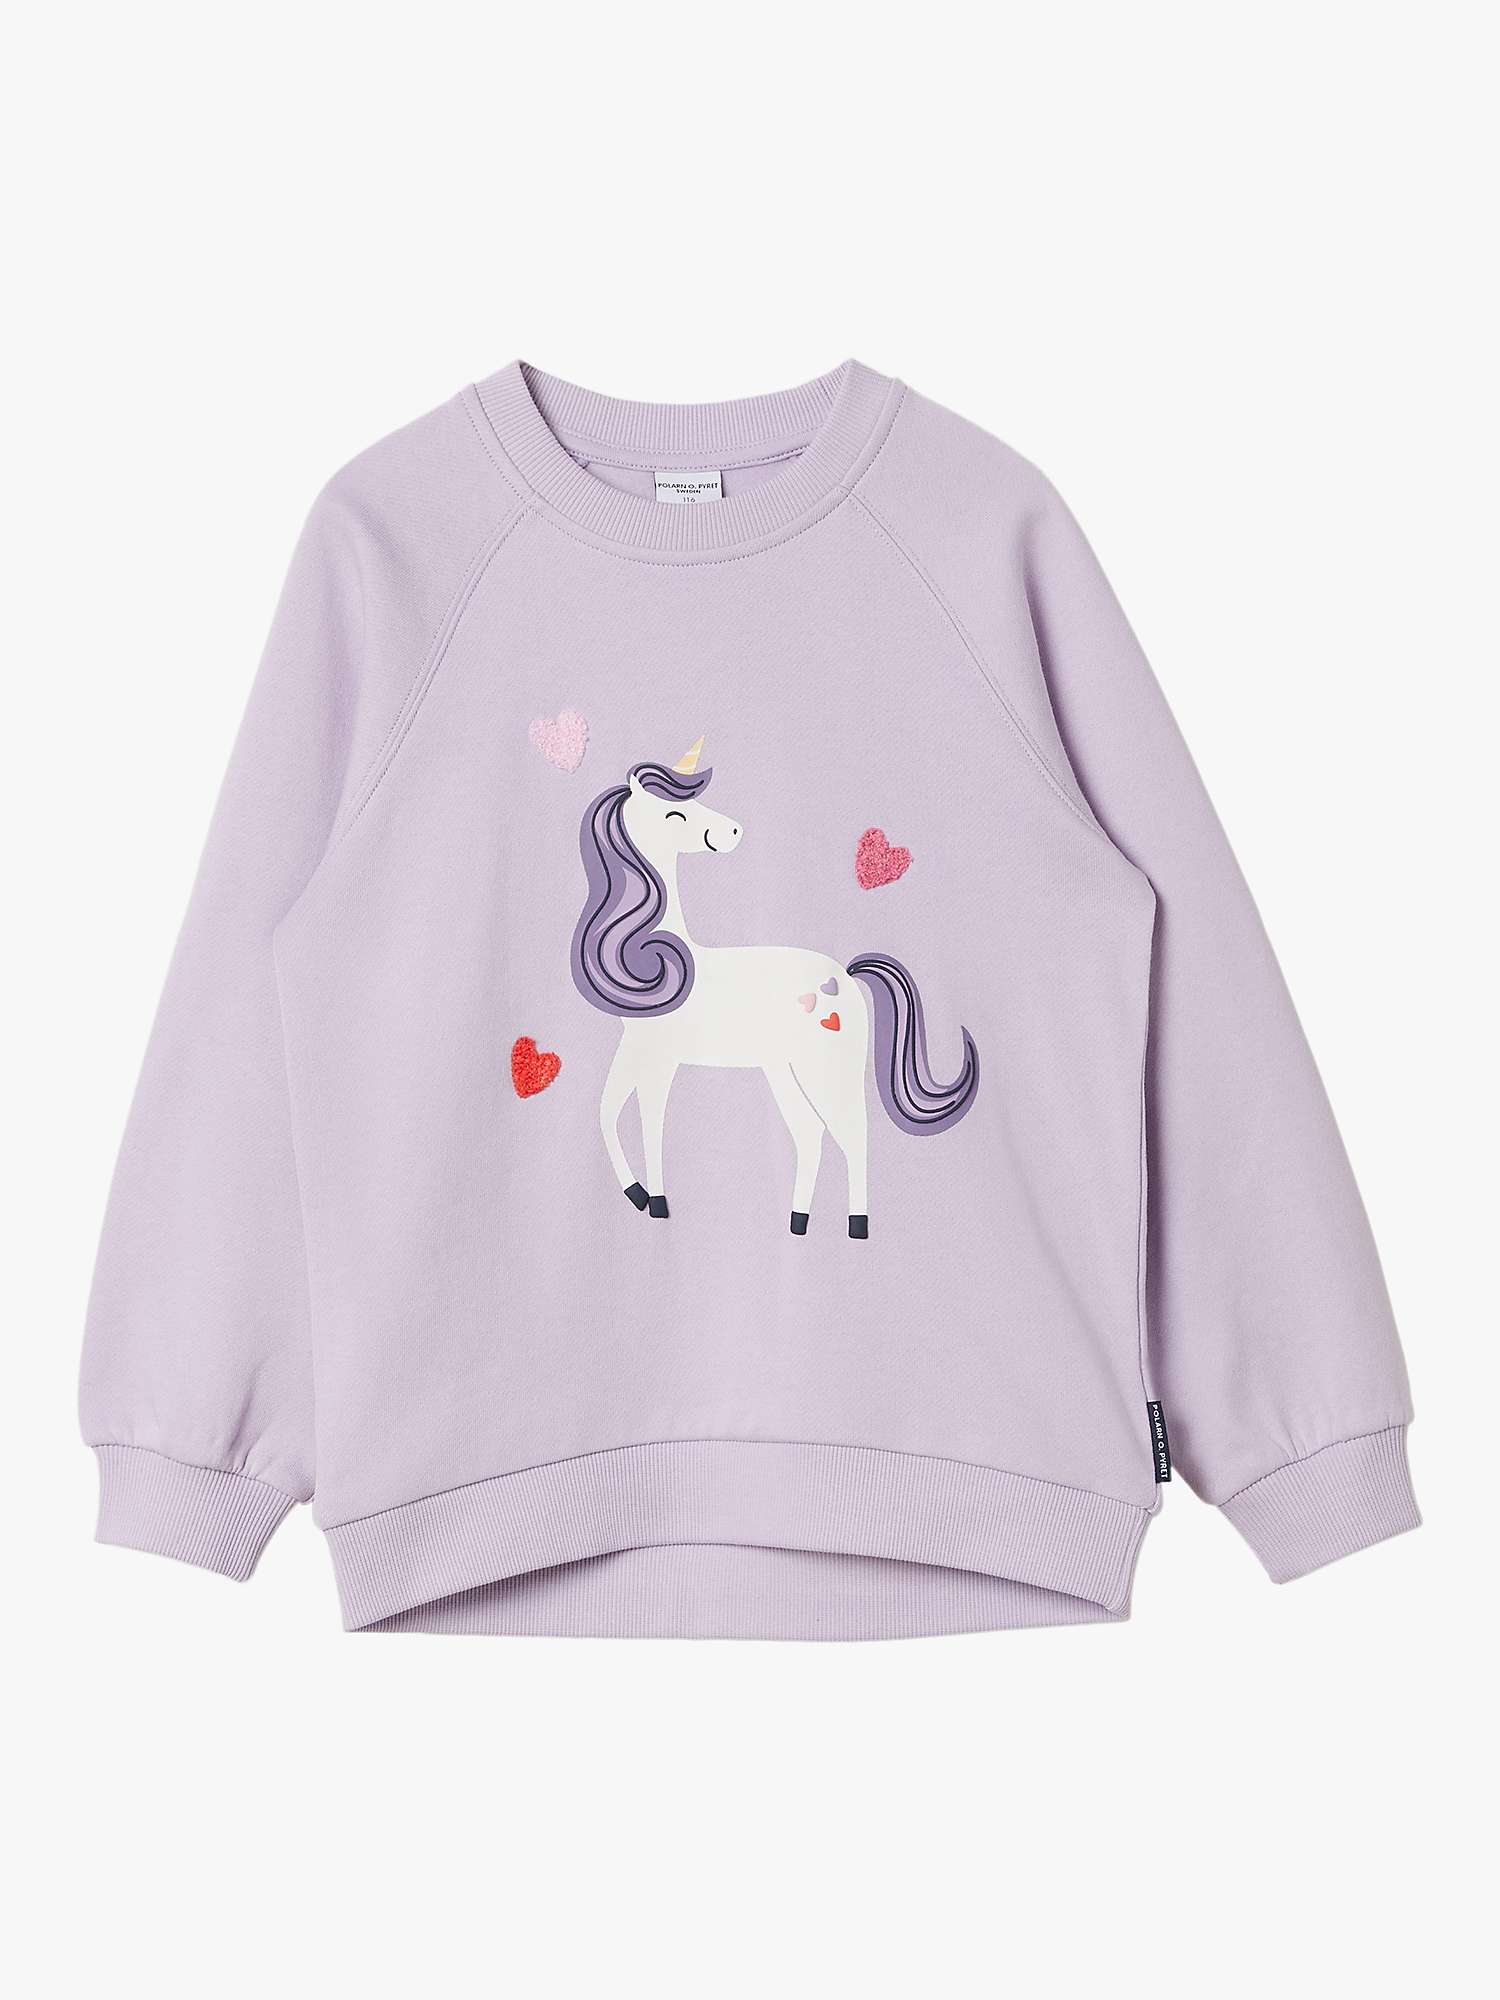 Buy Polarn O. Pyret Kids' Organic Cotton Unicorn Sweatshirt, Purple Online at johnlewis.com